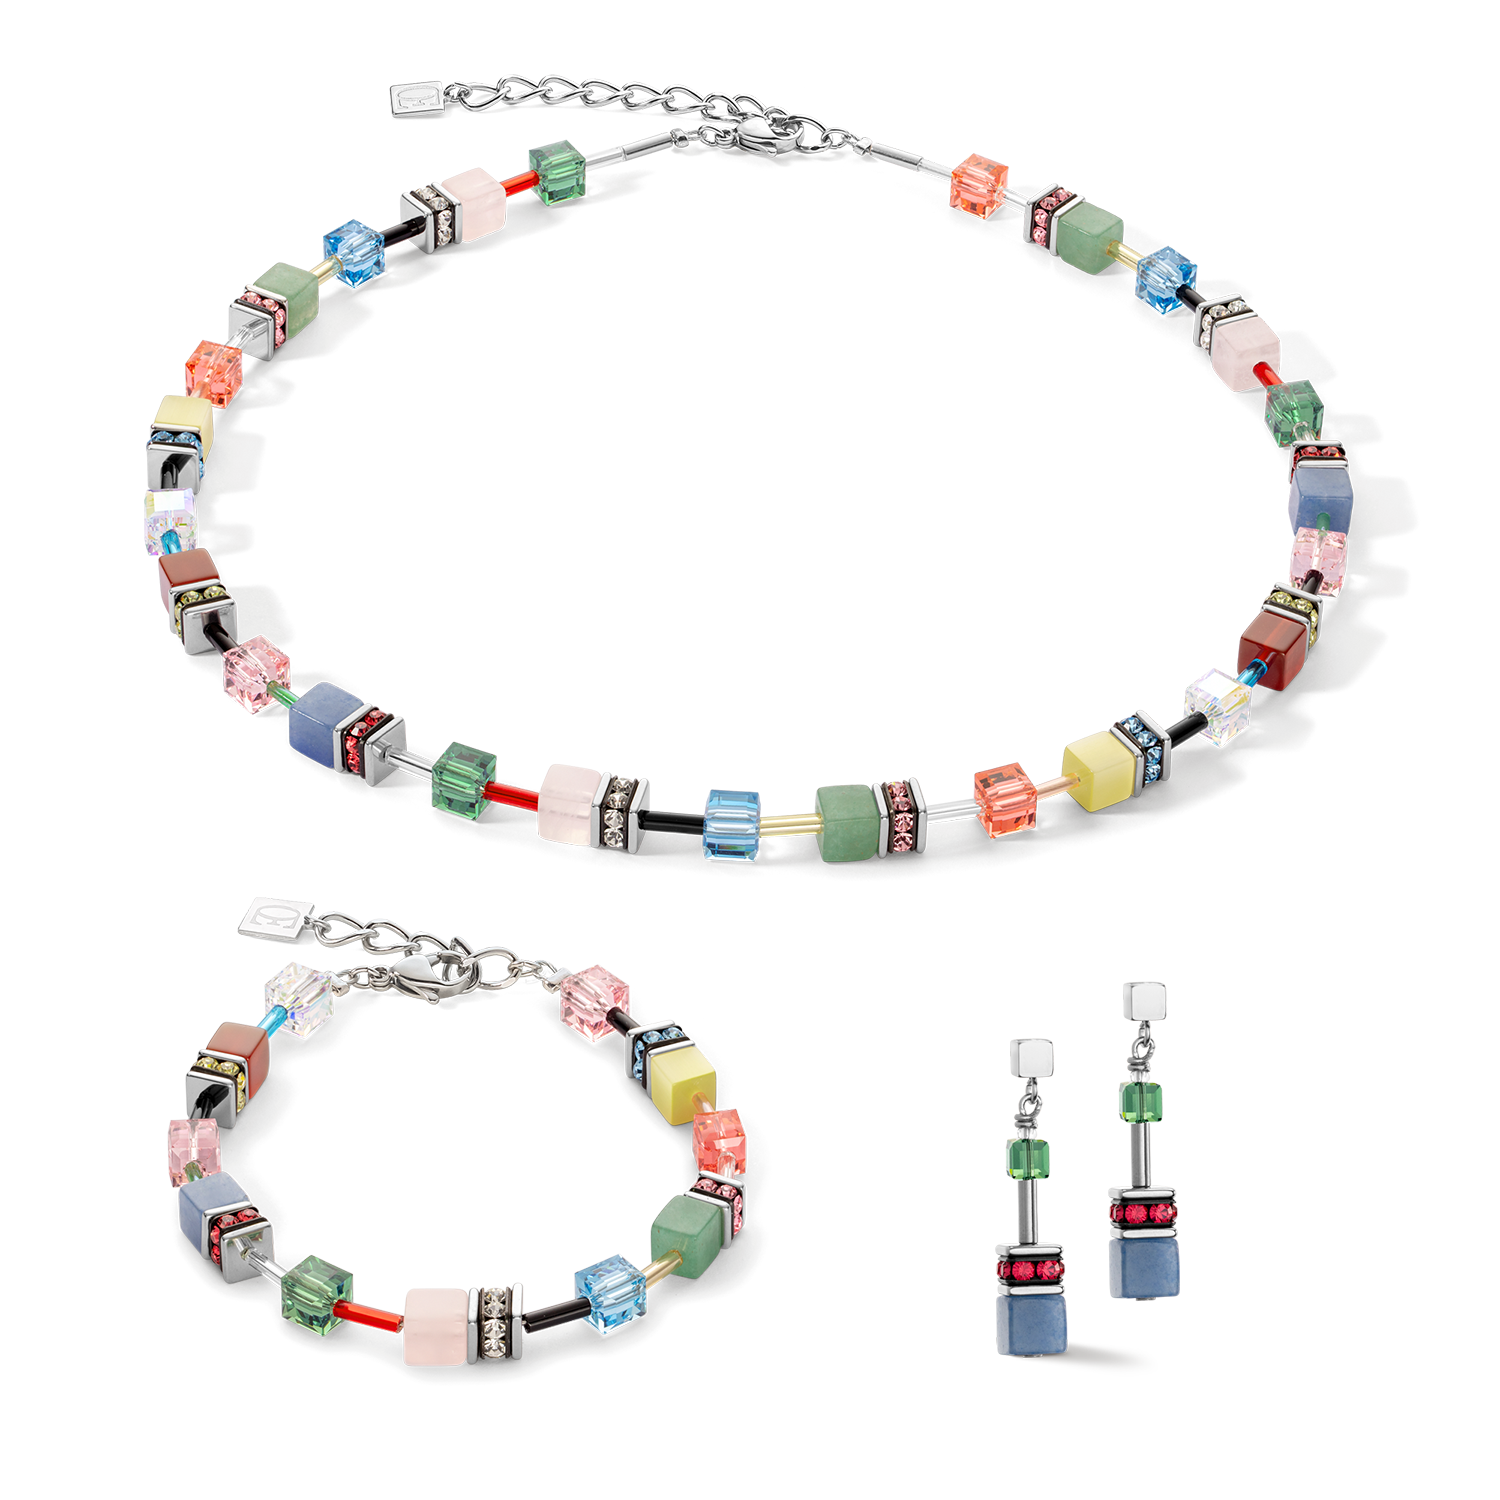 Bracelet GeoCUBE® Iconic Precious Multicolour Delight